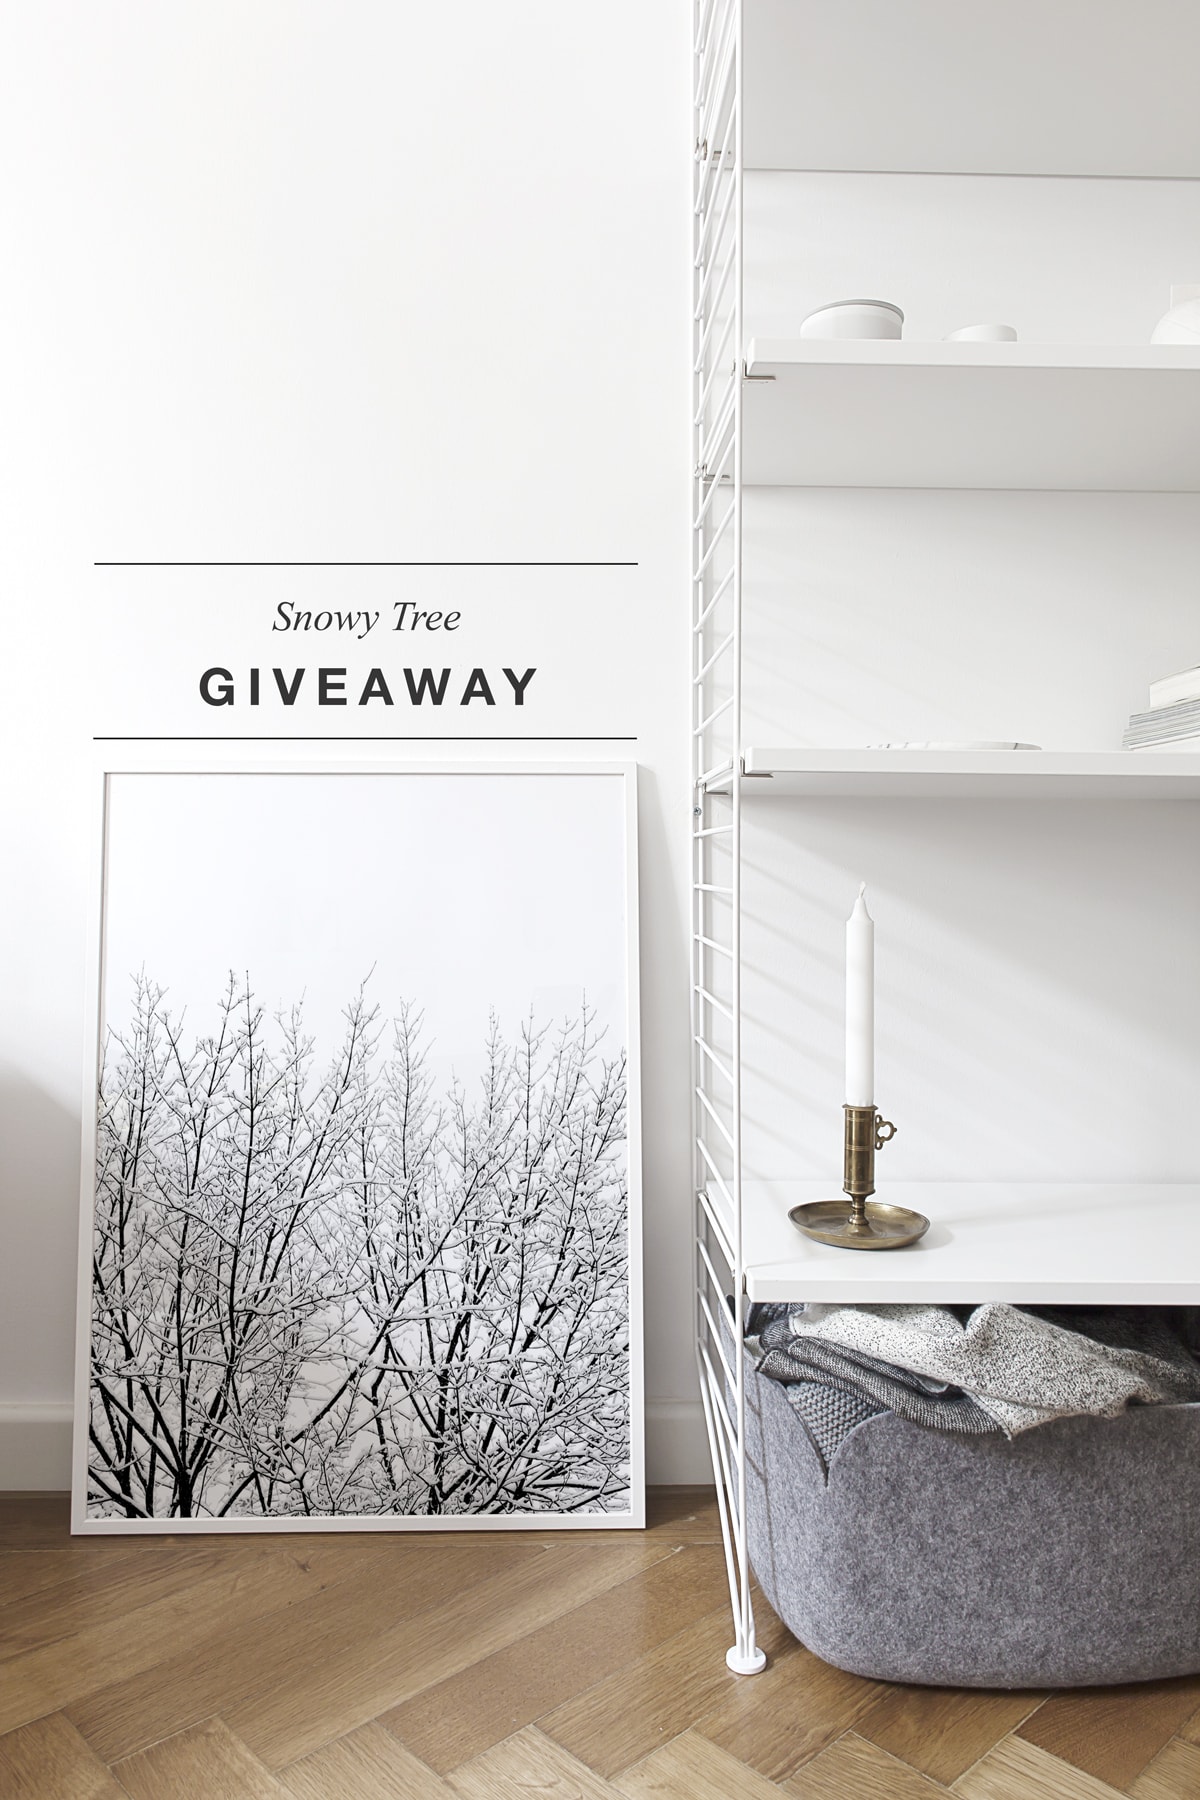 'Snowy Tree' print giveaway